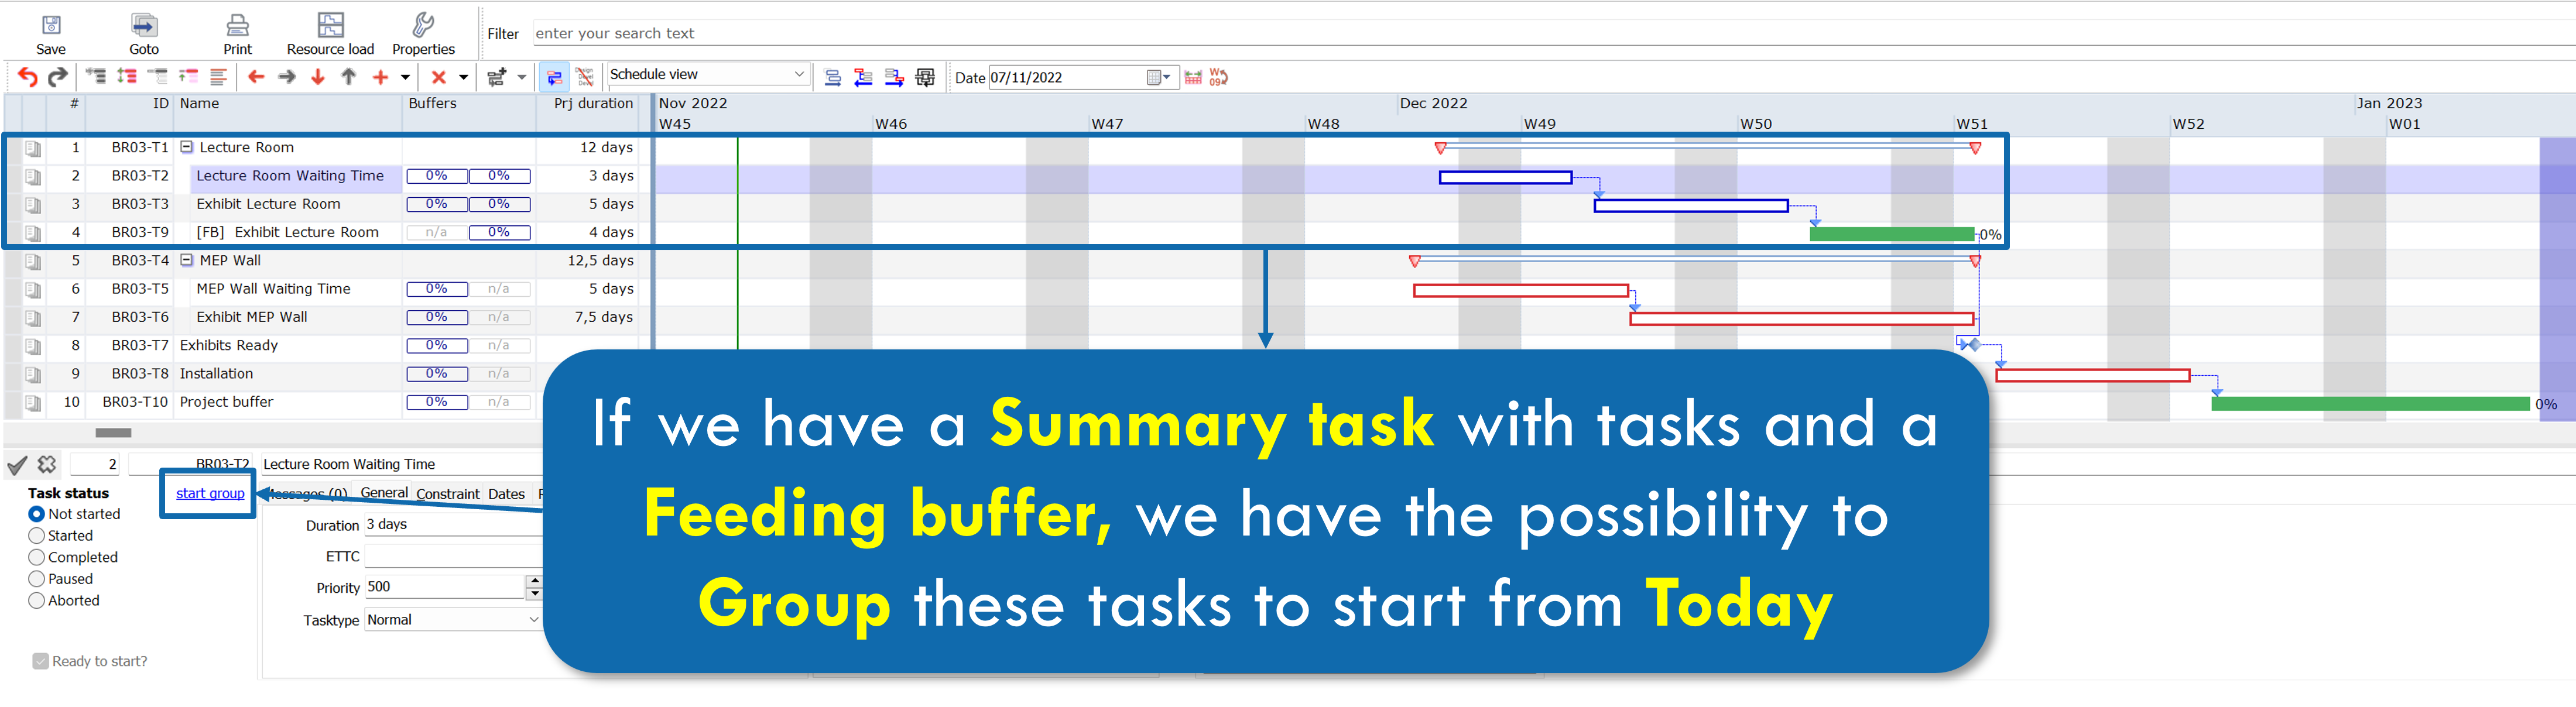 Summary_task_with_feeding_buffer.png